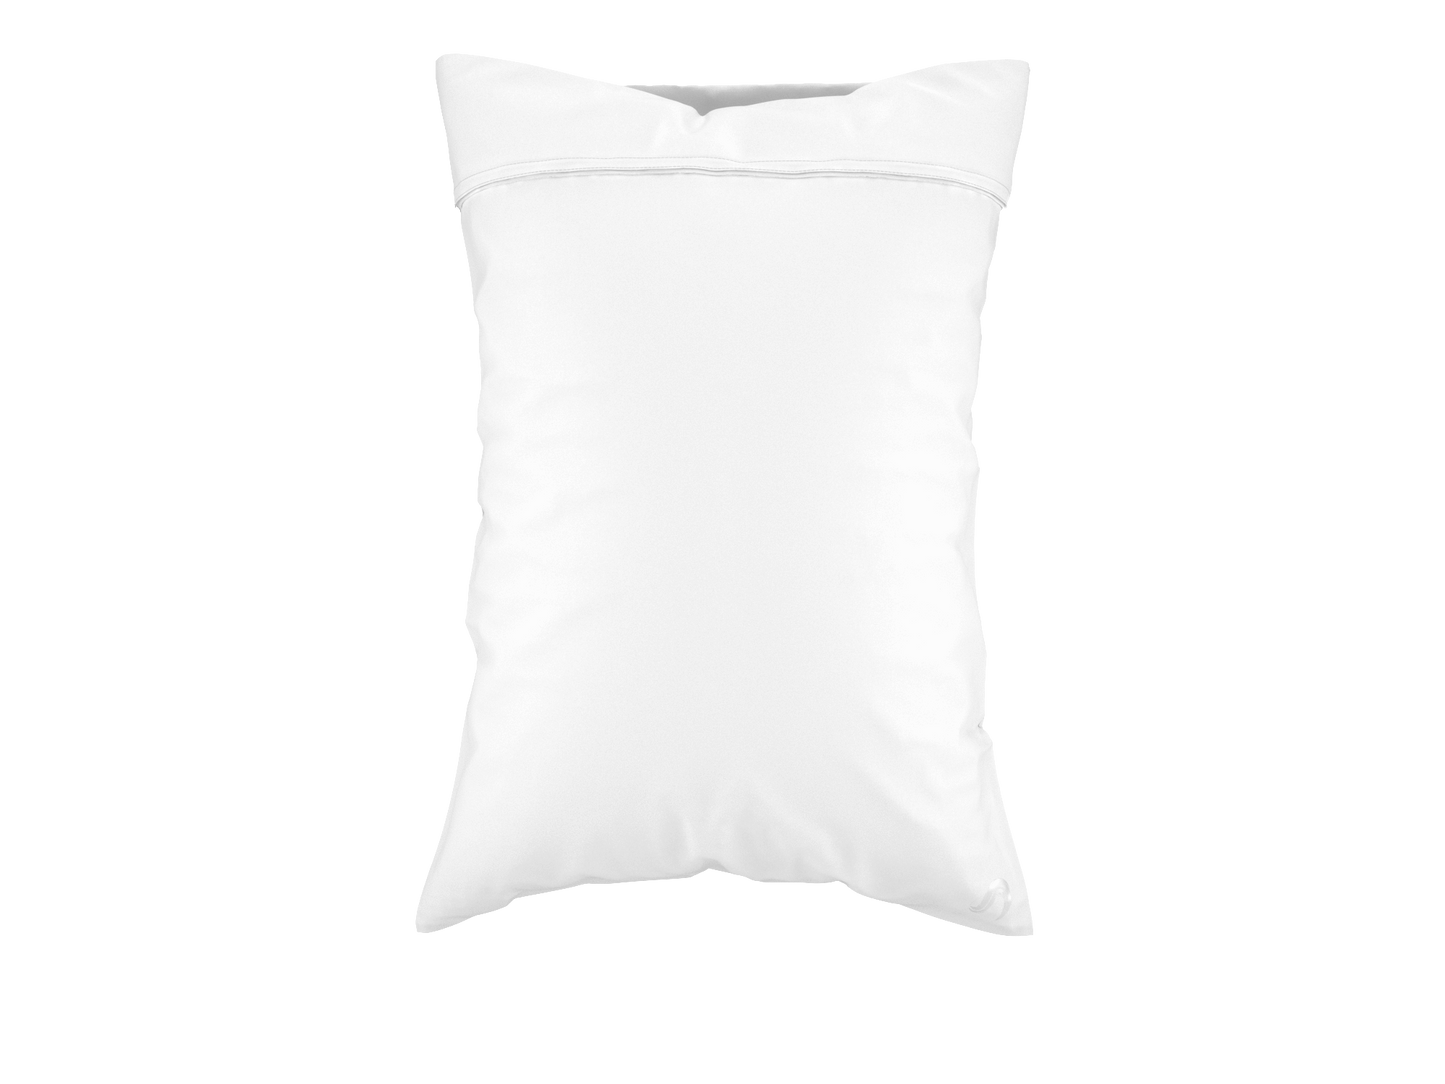 Sleepgram pillowcase angle2